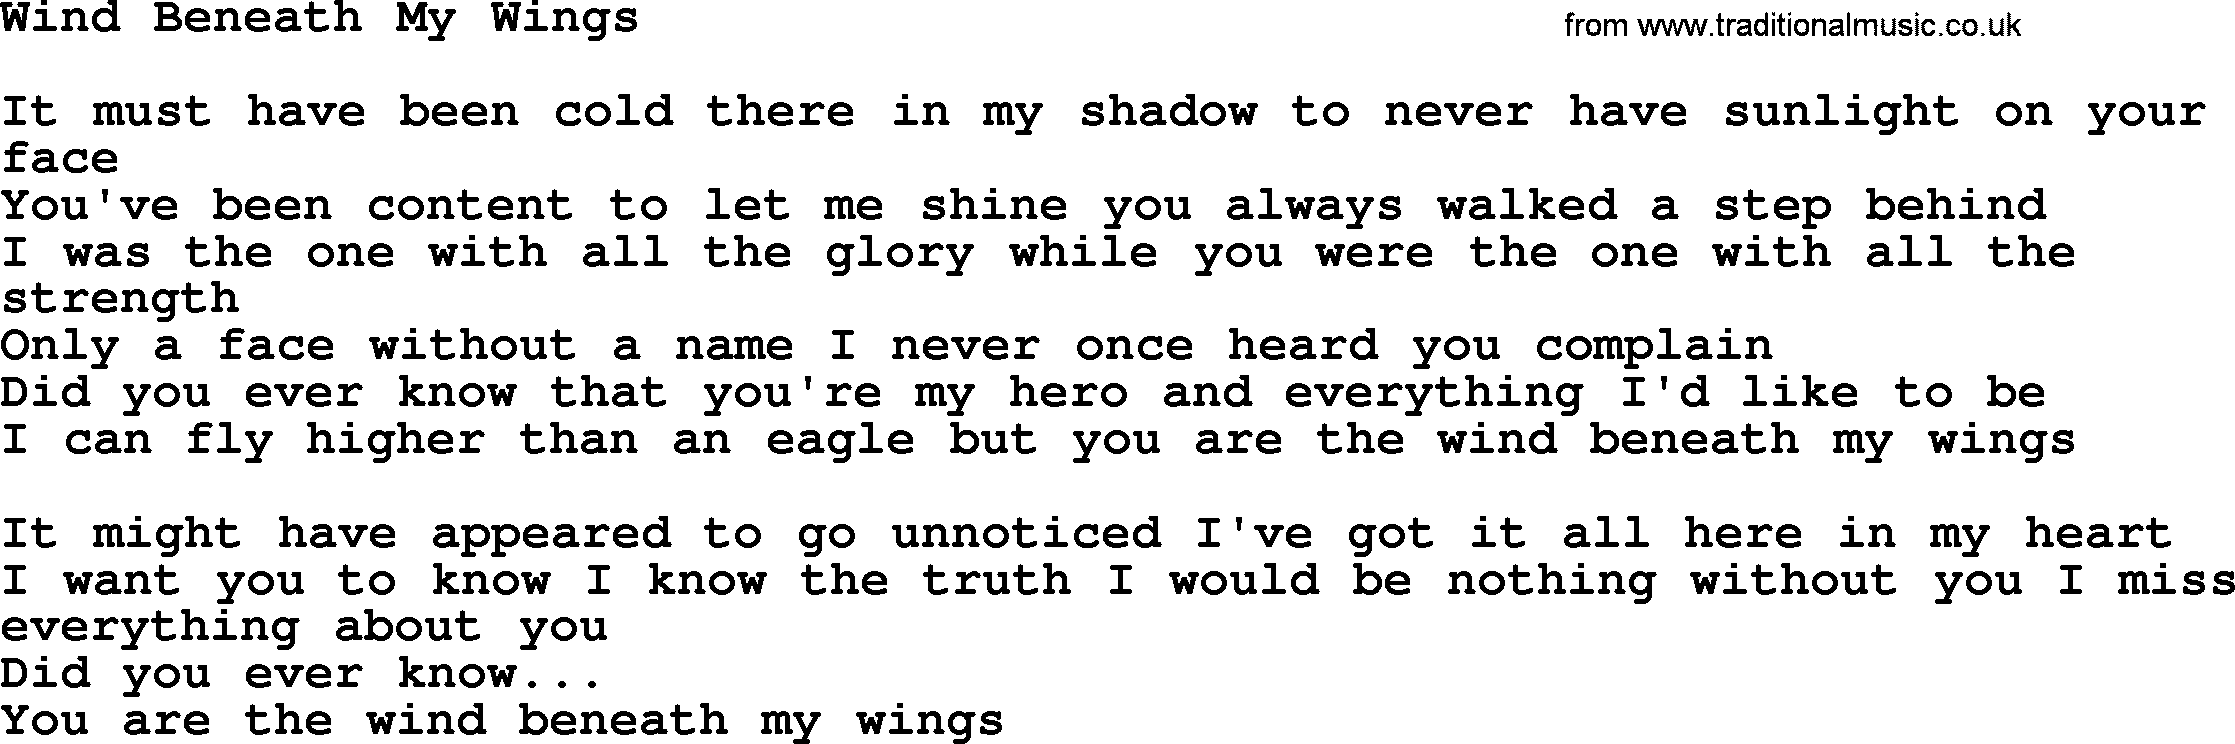 Willie Nelson song: Wind Beneath My Wings lyrics